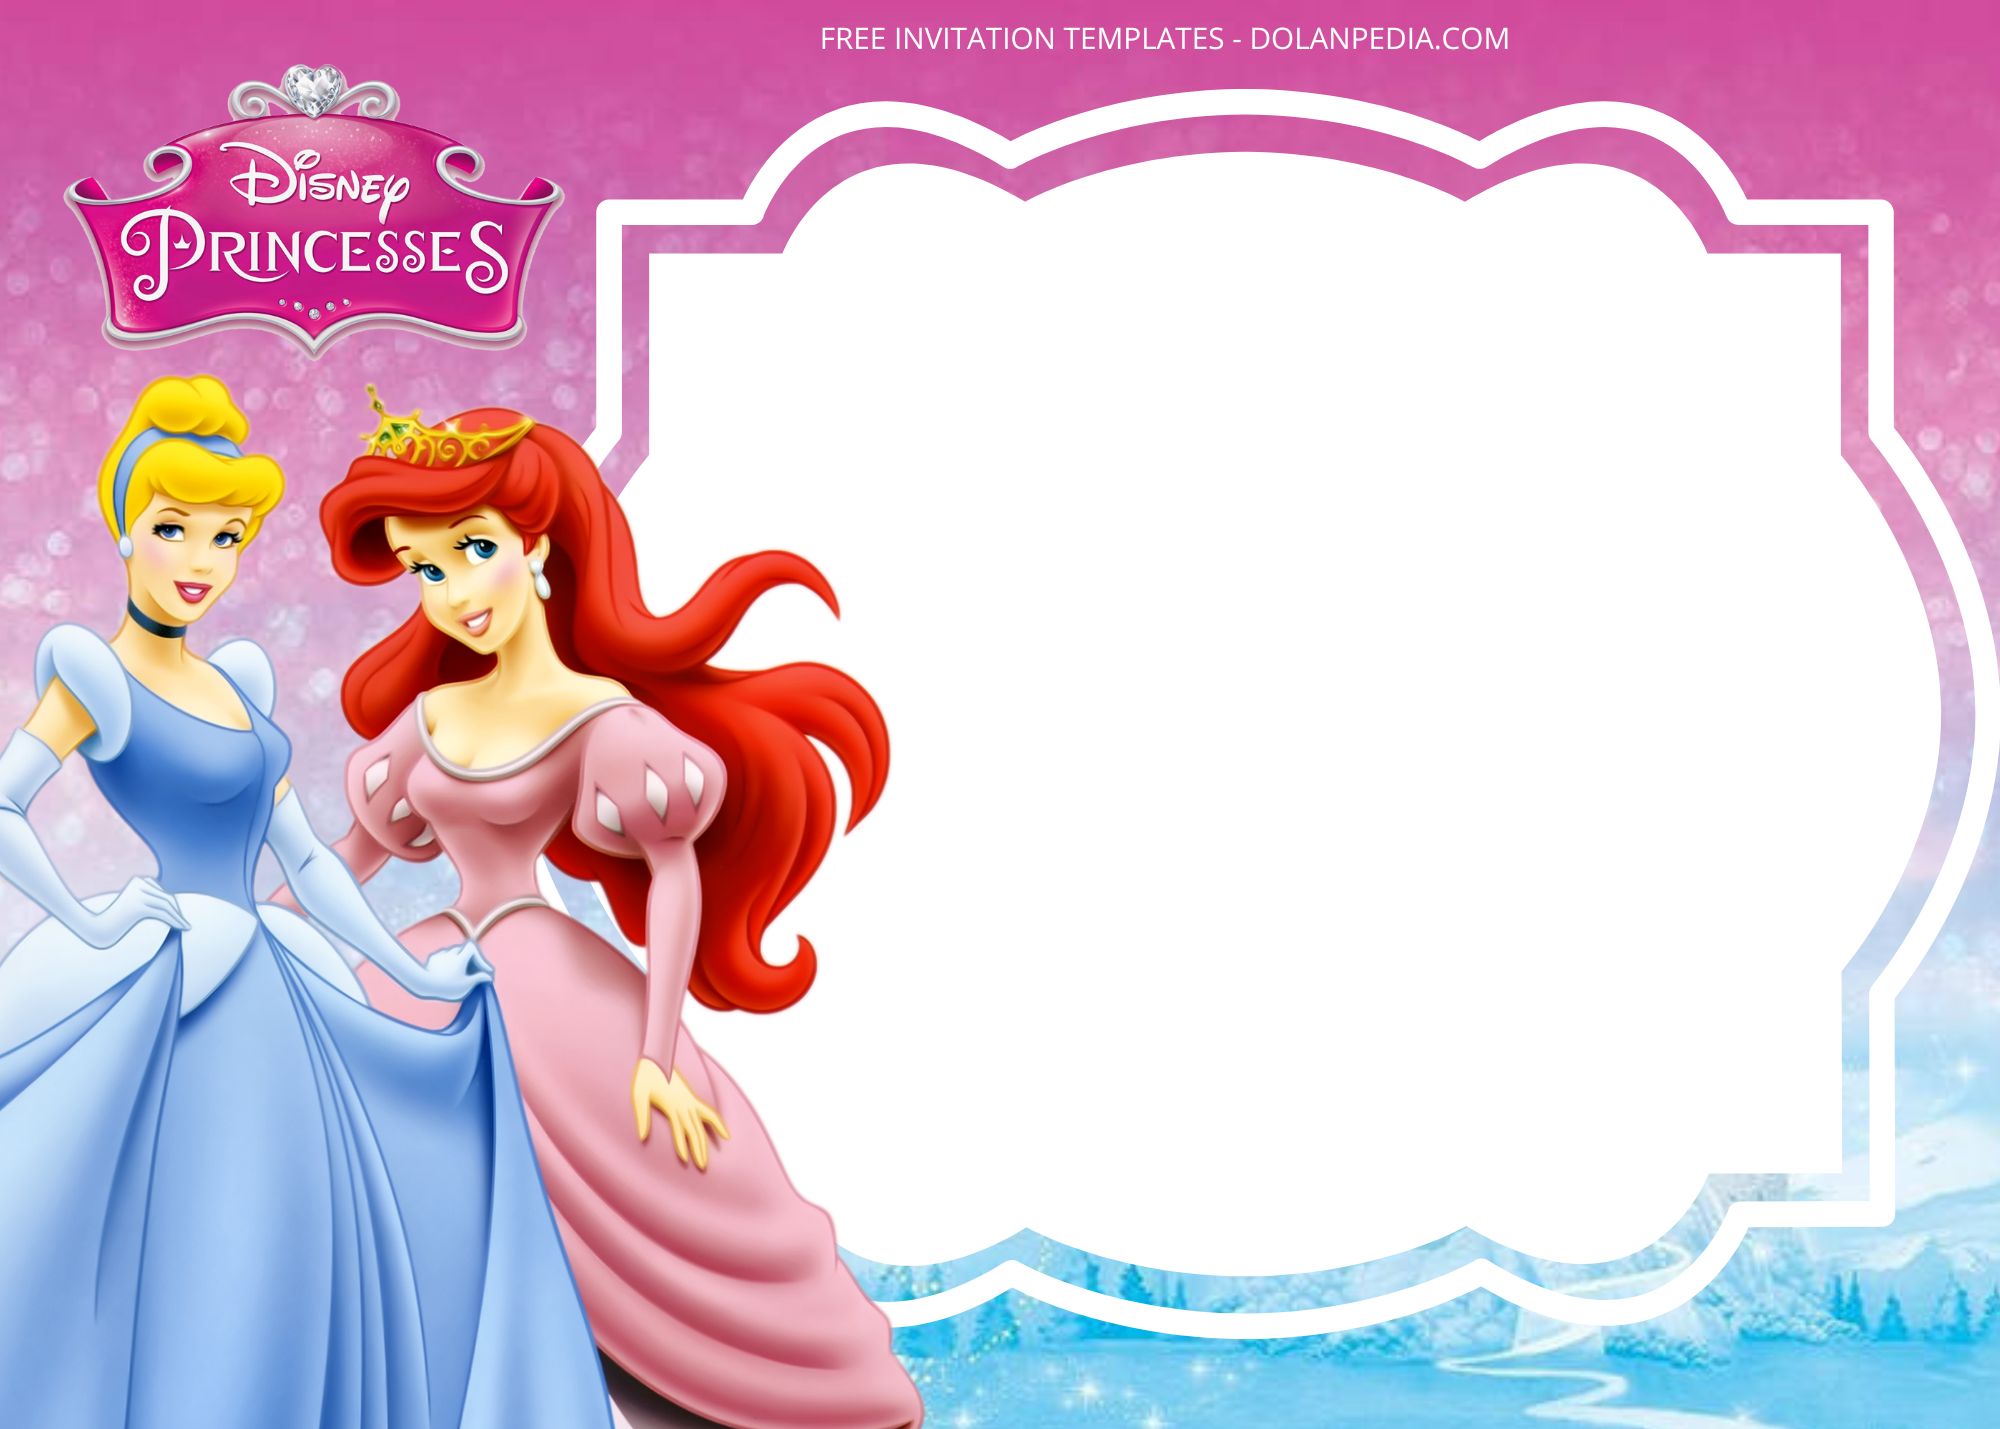 Blank Disney Princess Birthday Invitation Templates Two